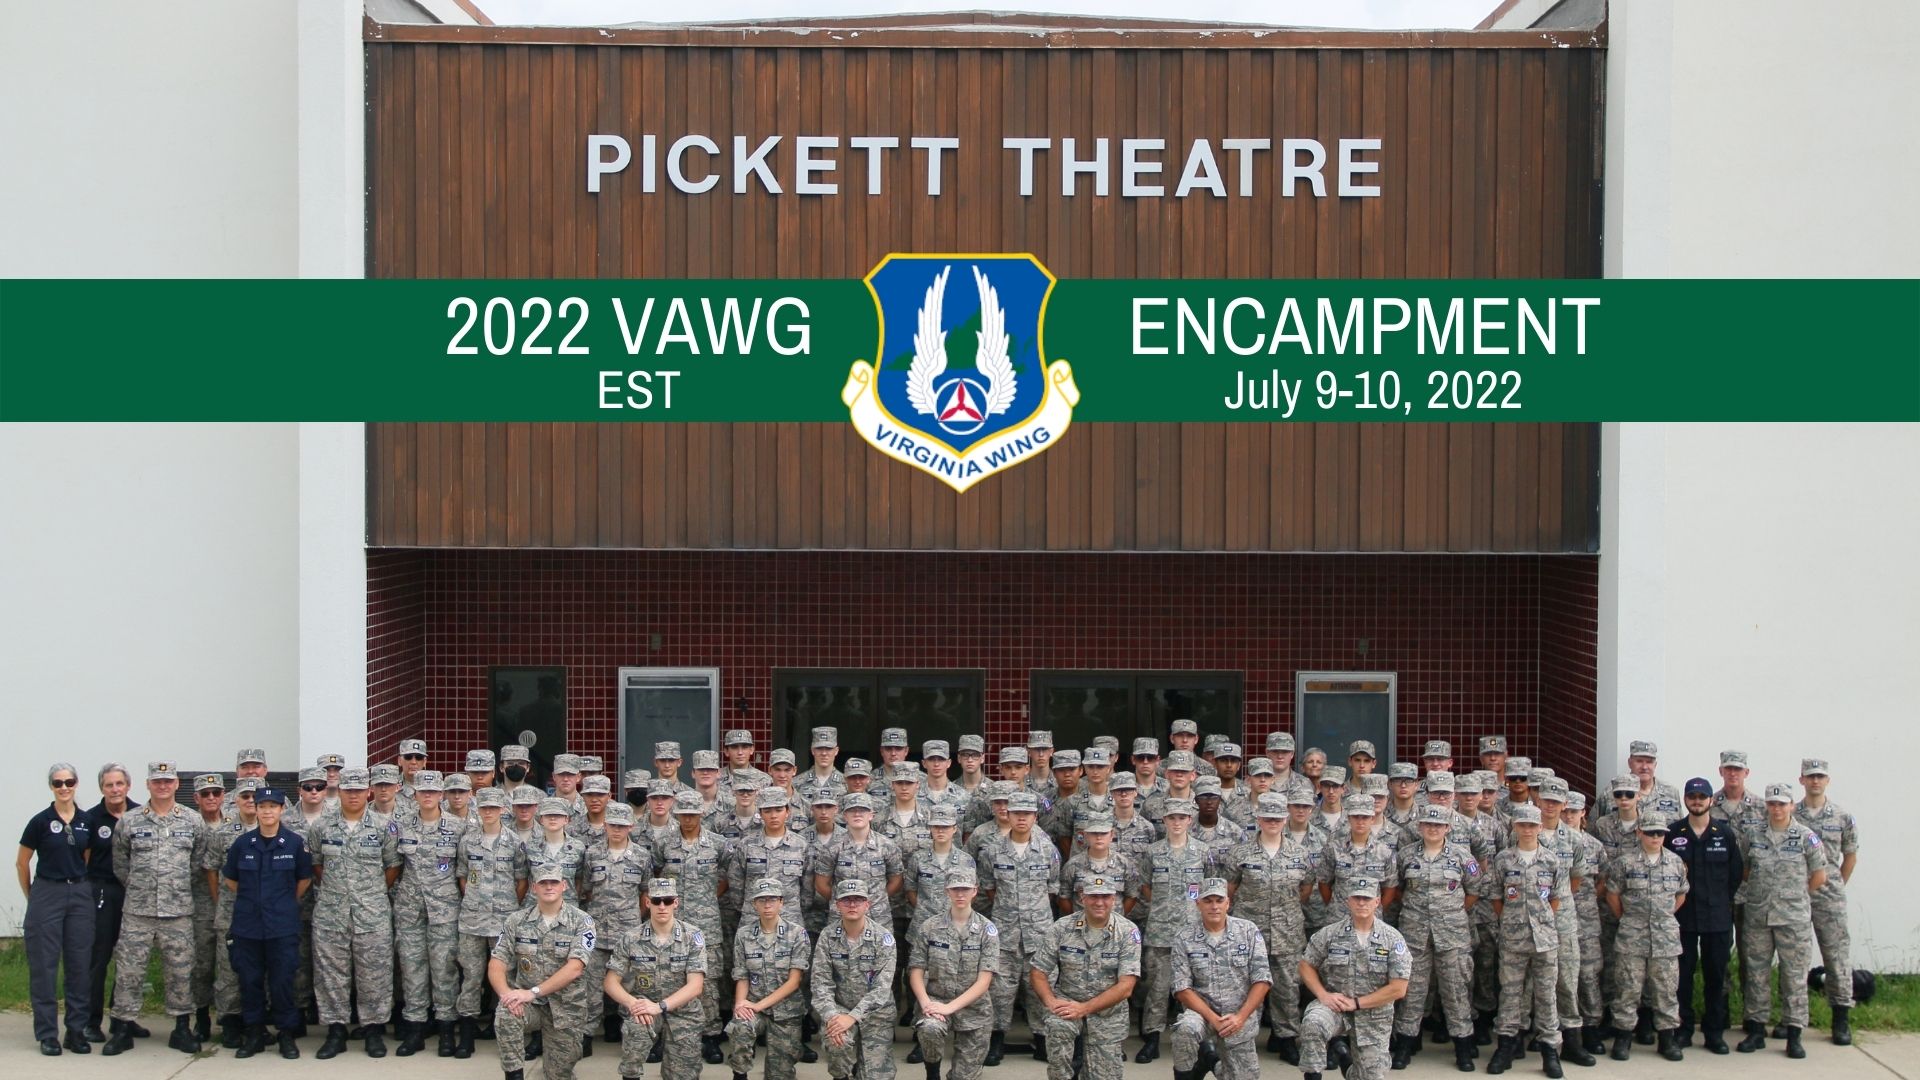 Summer Encampment Virginia Wing, Civil Air Patrol